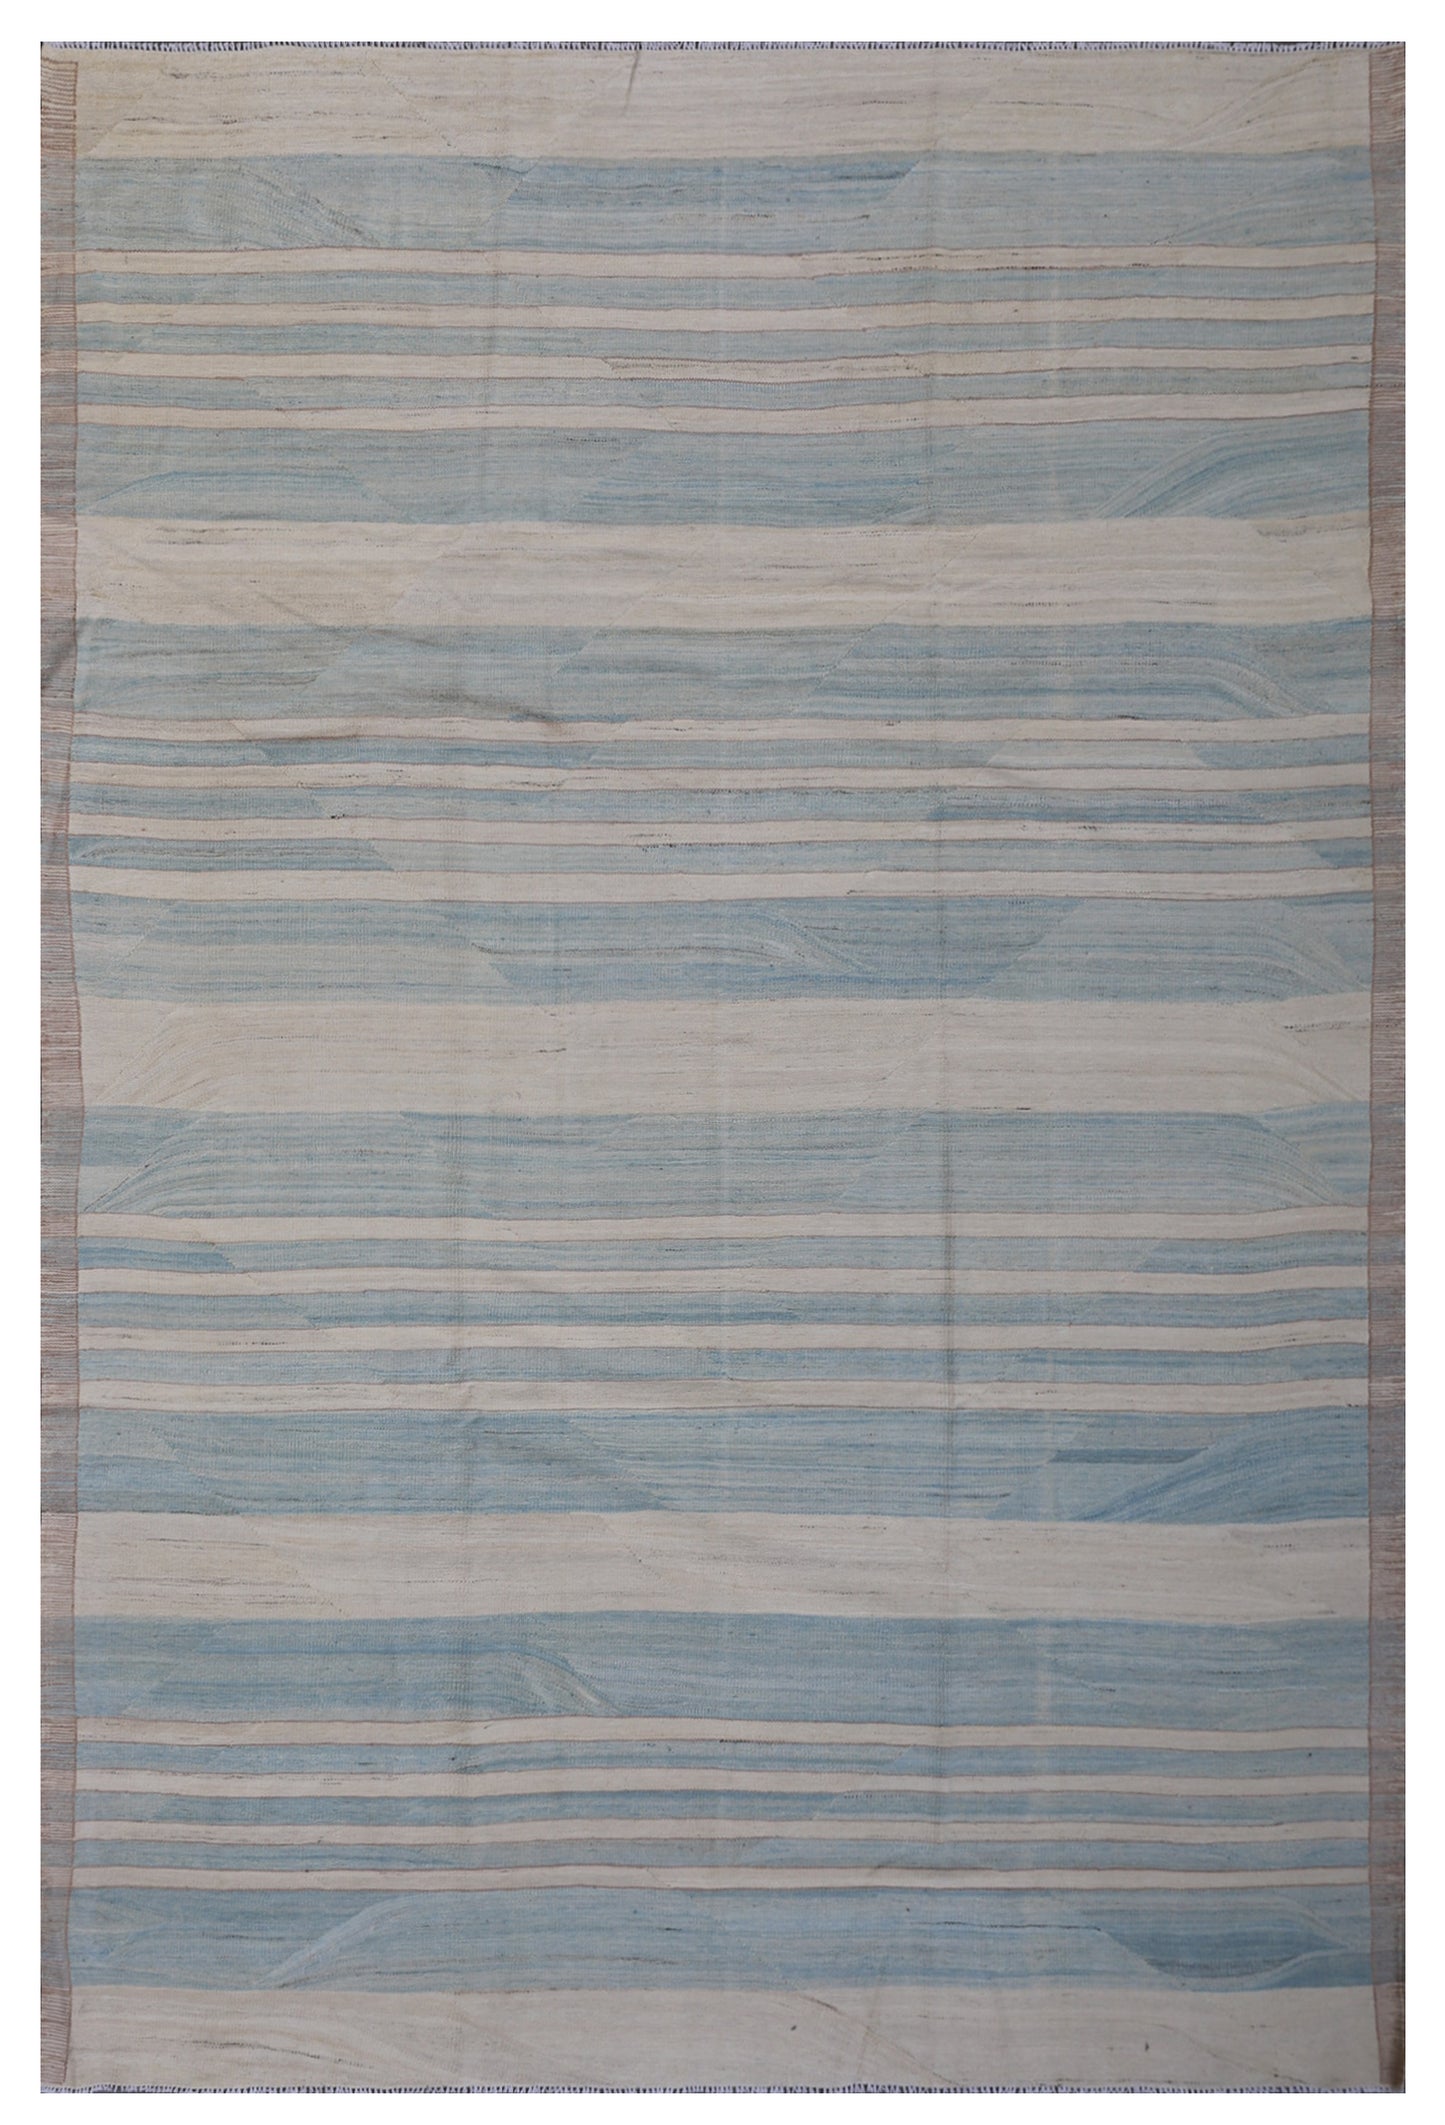 8'x10' Hand Woven Blue and White Stripe Ariana Kilim Area Rug